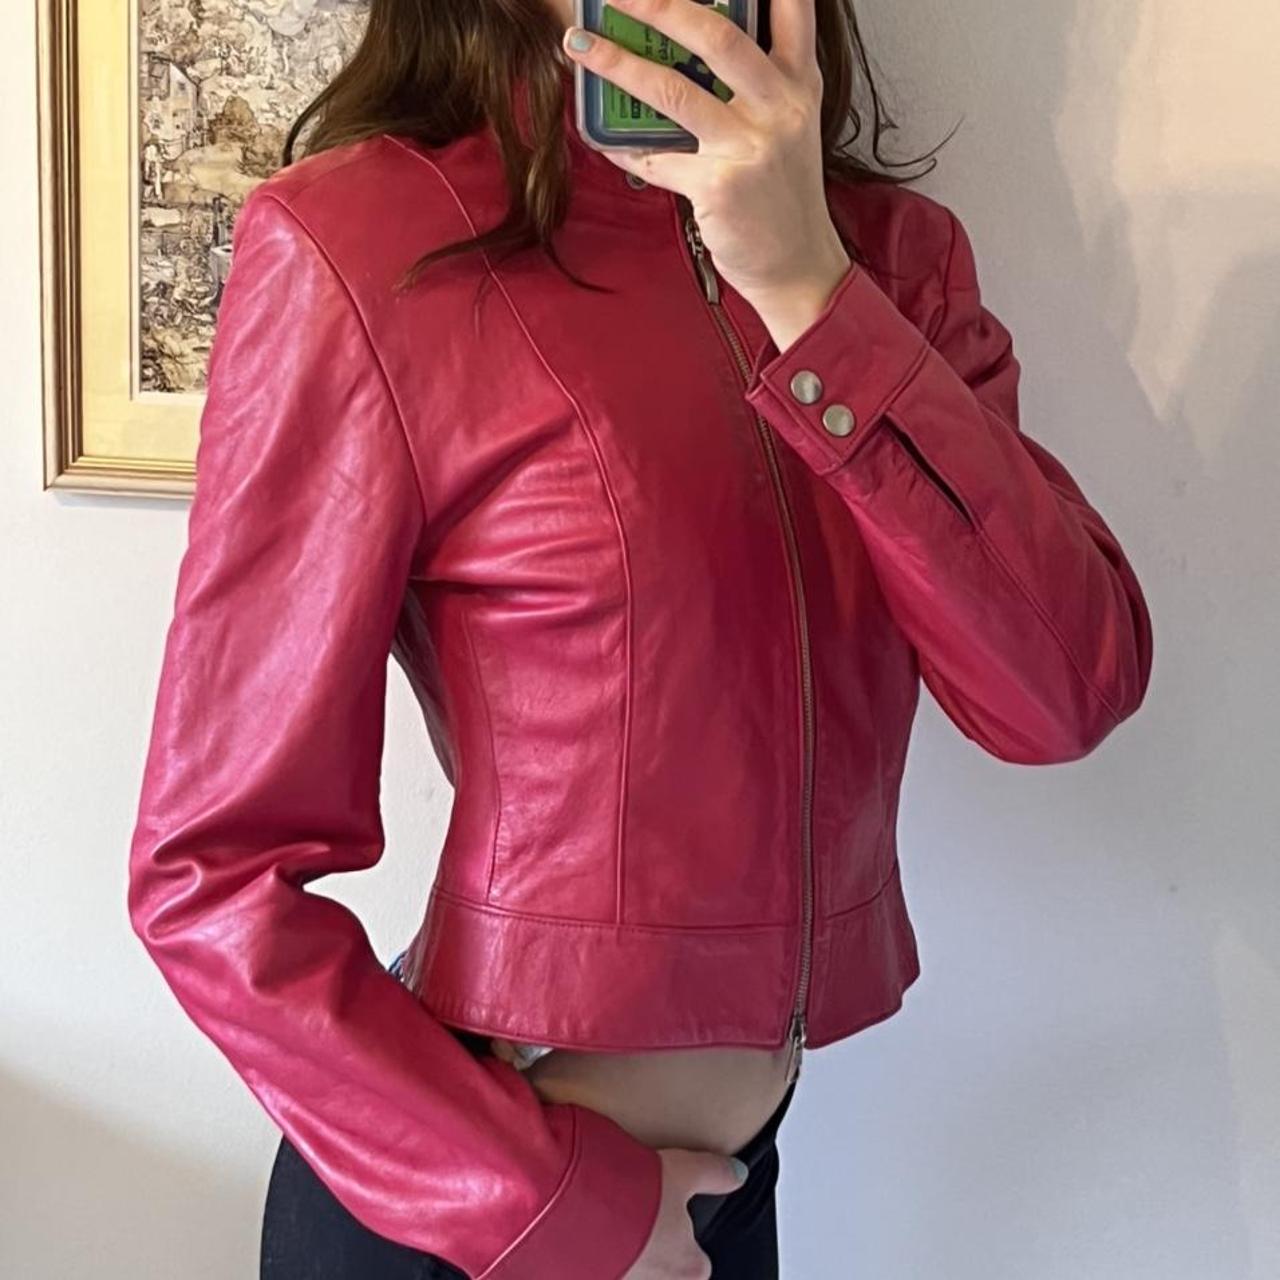 Insane hot pink leather biker jacket with silver... - Depop